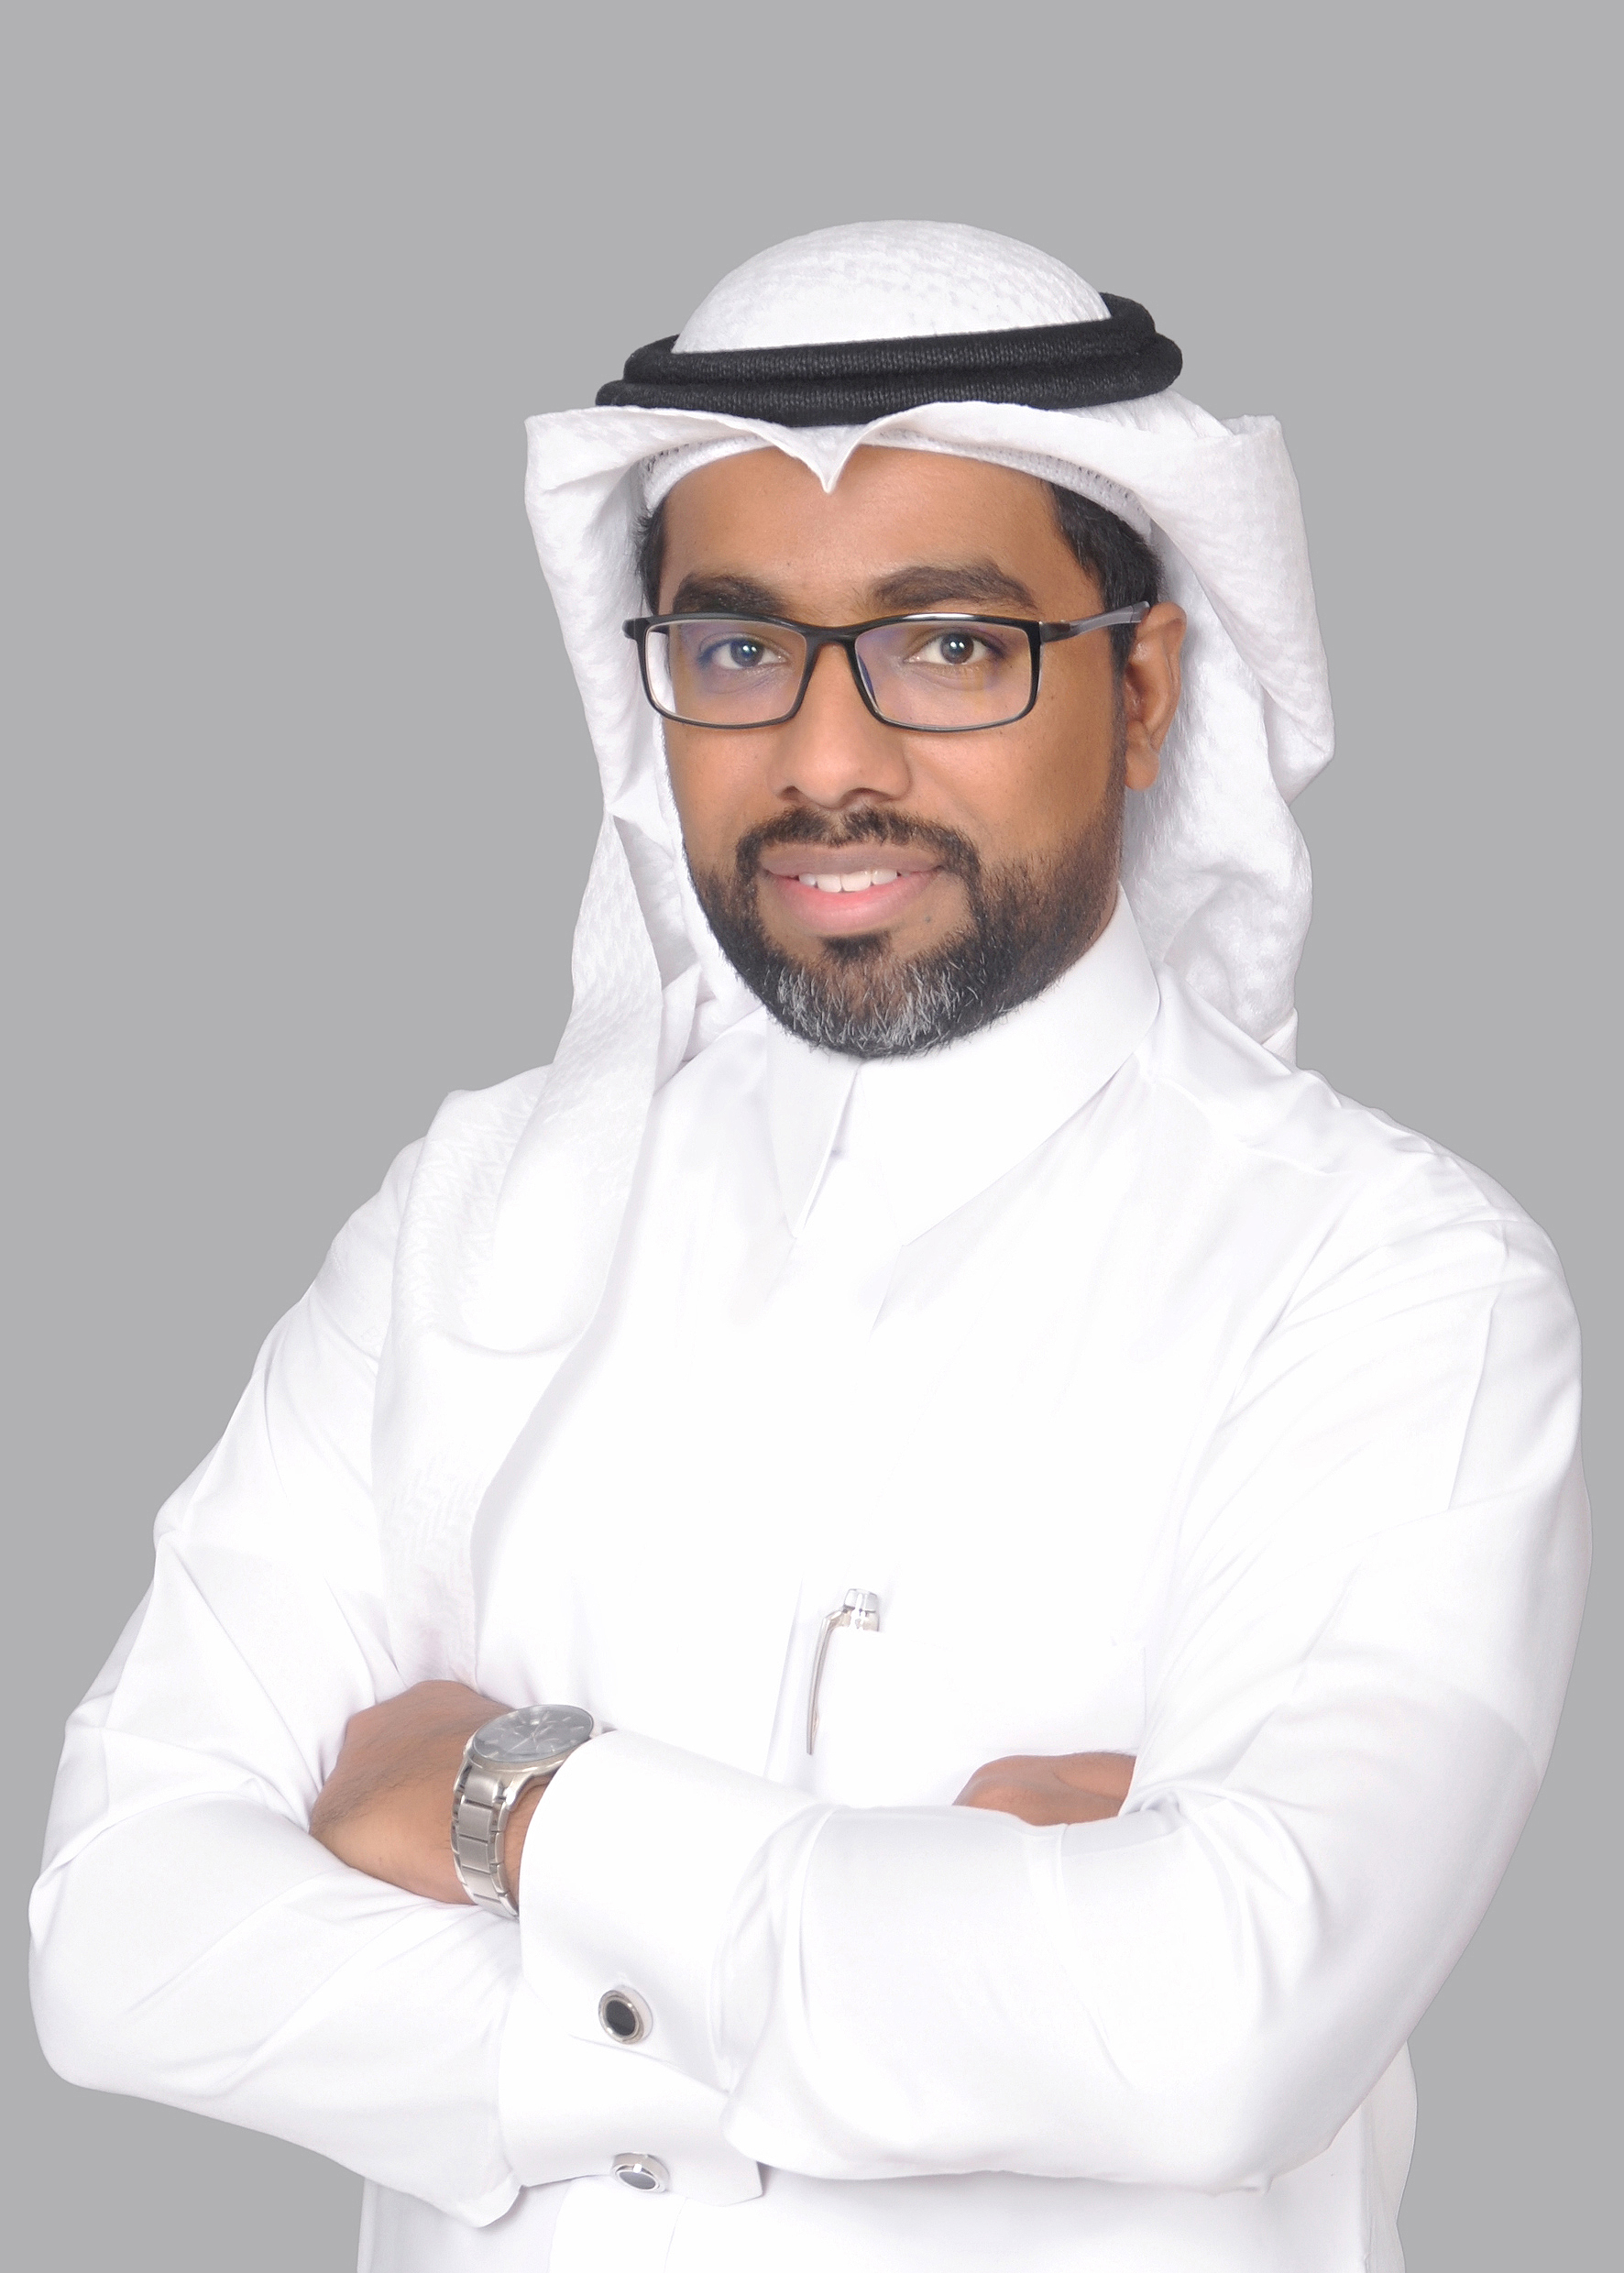 Fadhel Isa, Chief Technology Officer - Ericsson Saudi Arabia